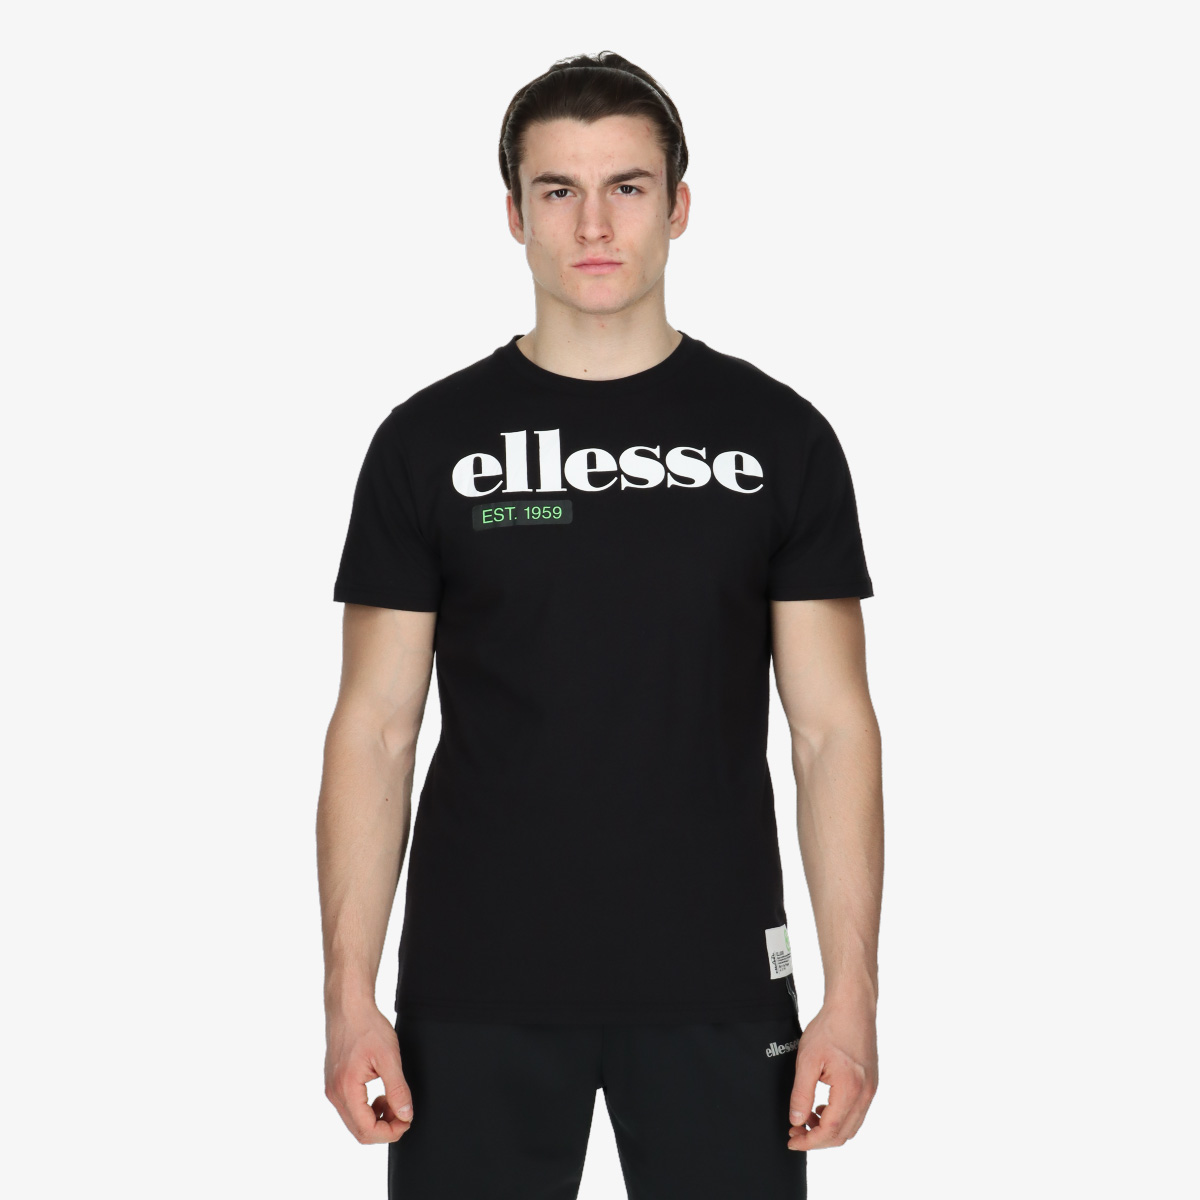 ELLESSE ELLESSE MENS T-SHIRT 